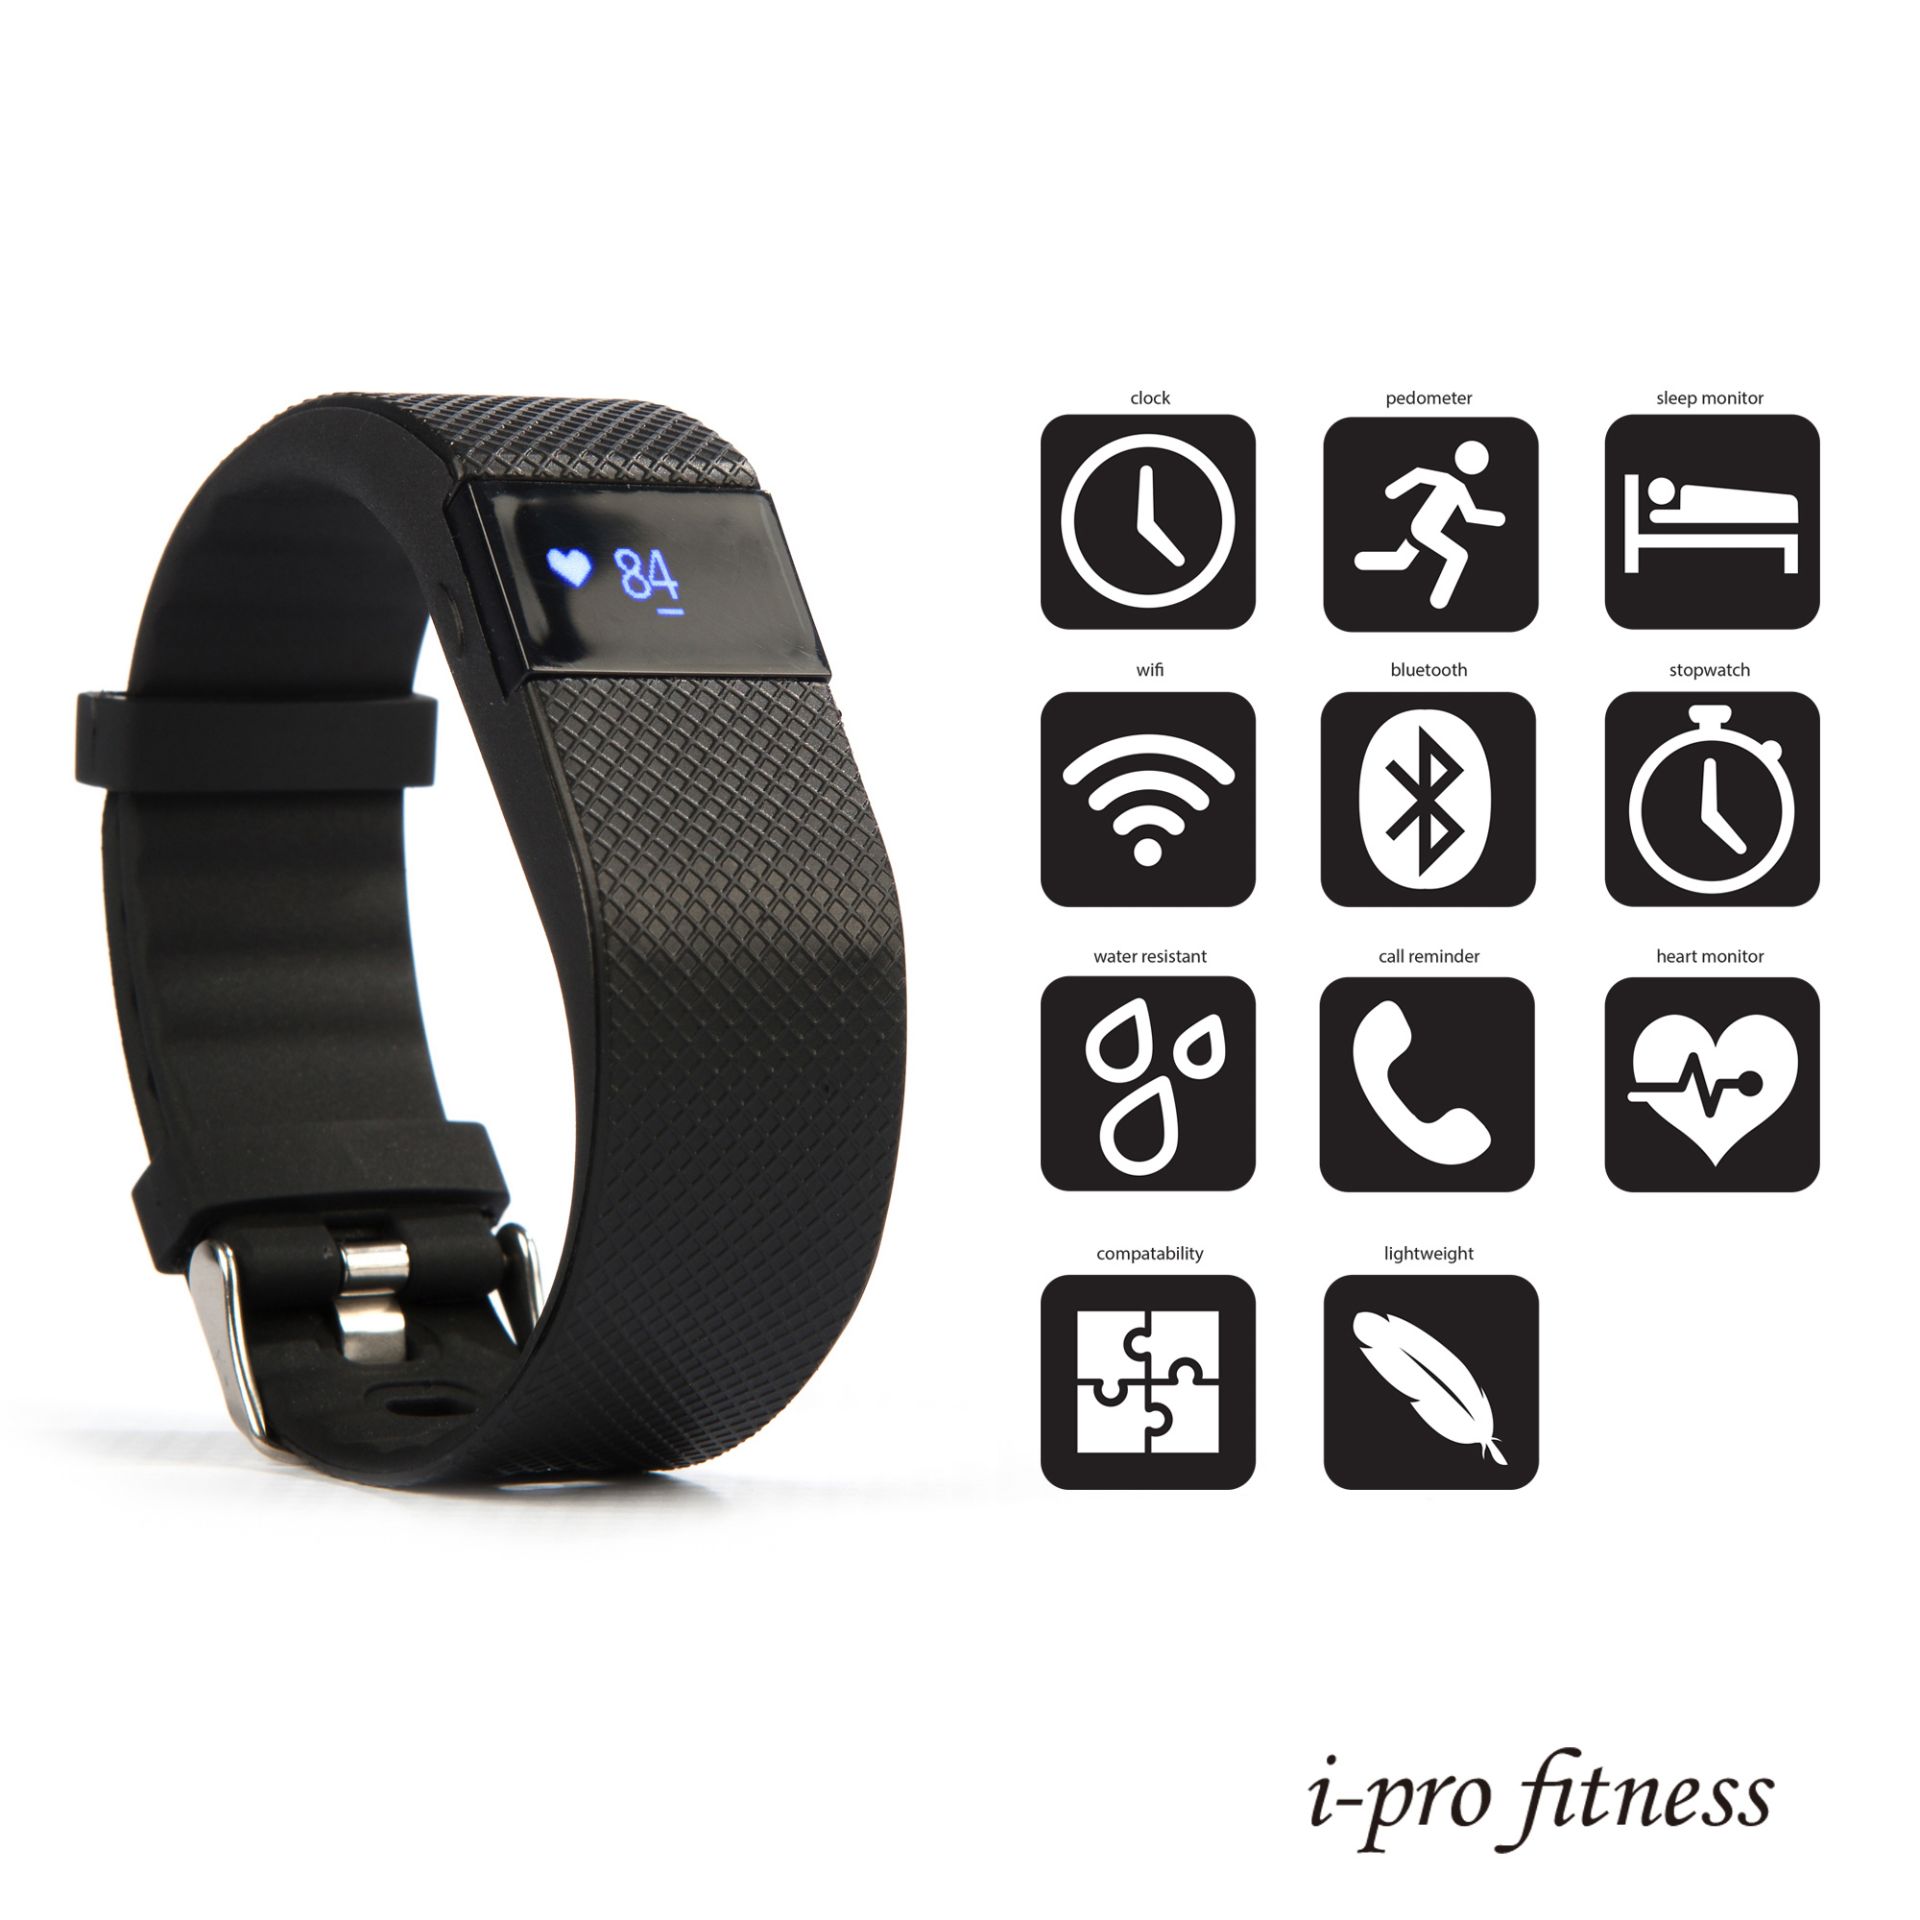 Fitness Tracker i-pro fitness, Bluetooth 4.0 Sports Smart Bracelet, Heart Rate Monitor, Pedometer. - Image 6 of 8